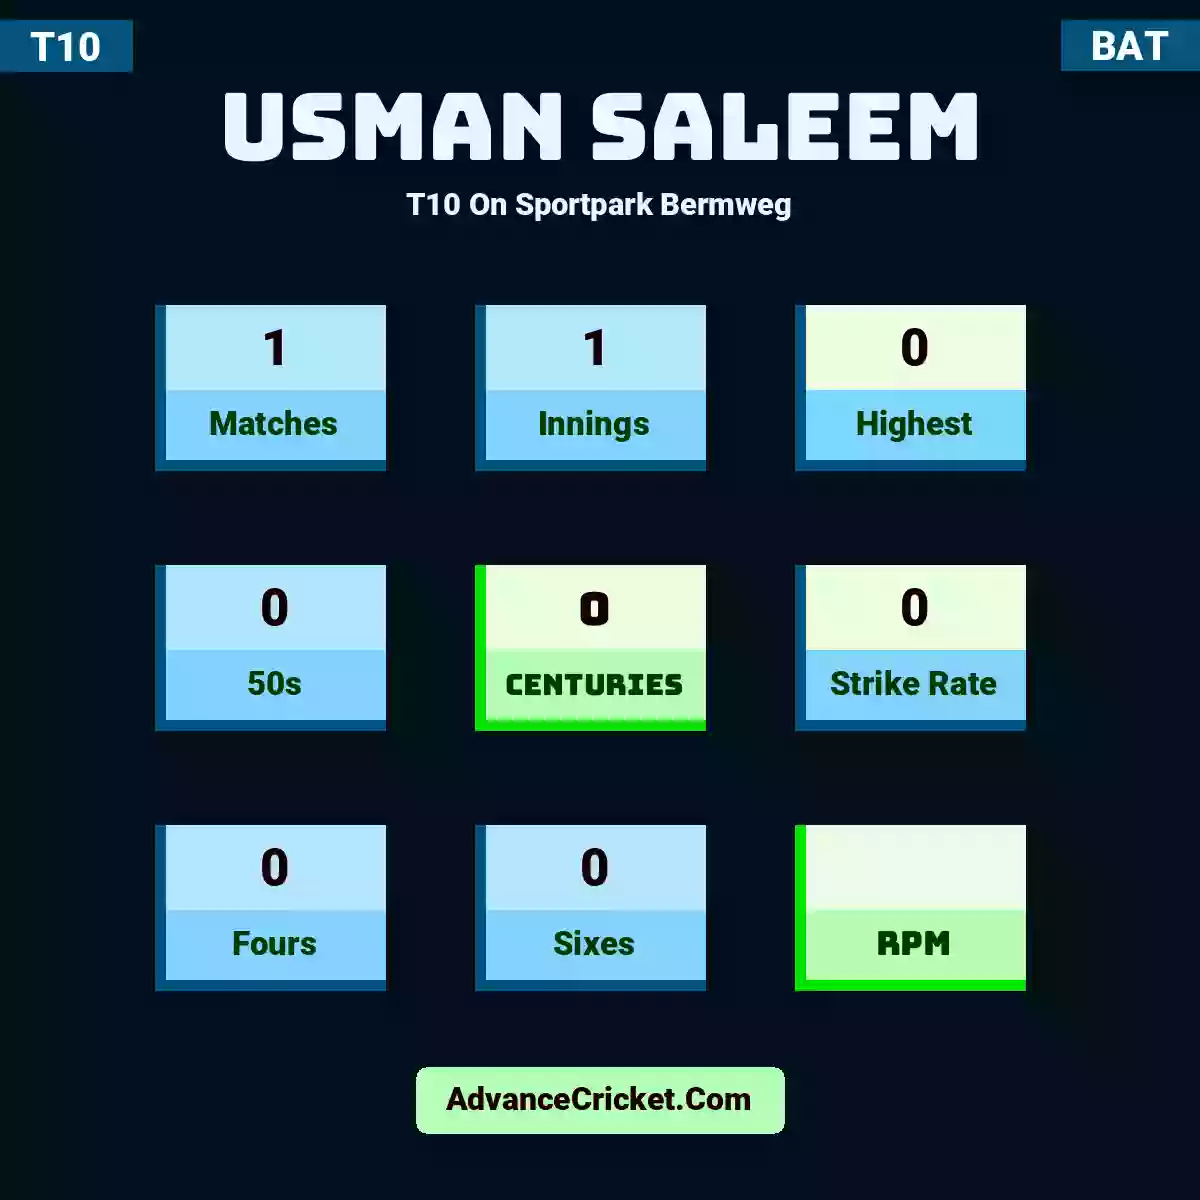 Usman Saleem T10  On Sportpark Bermweg, Usman Saleem played 1 matches, scored 0 runs as highest, 0 half-centuries, and 0 centuries, with a strike rate of 0. U.Saleem hit 0 fours and 0 sixes.